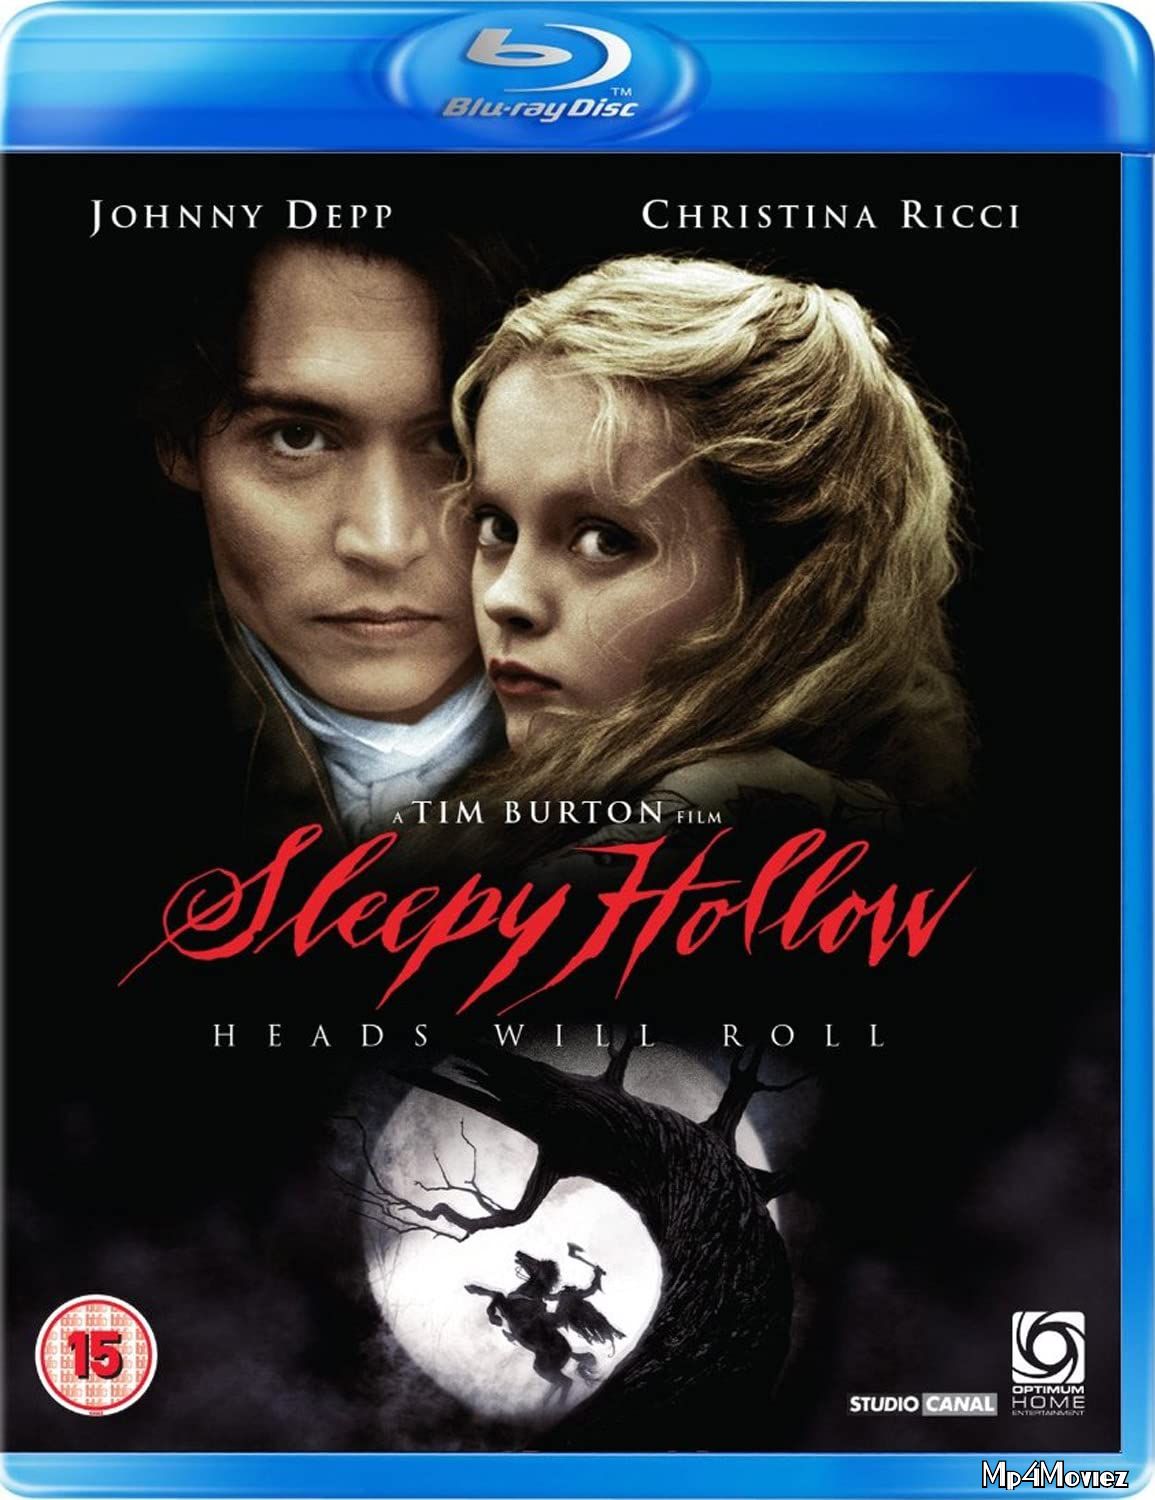 Sleepy Hollow (1999) Hindi Dubbed BluRay download full movie